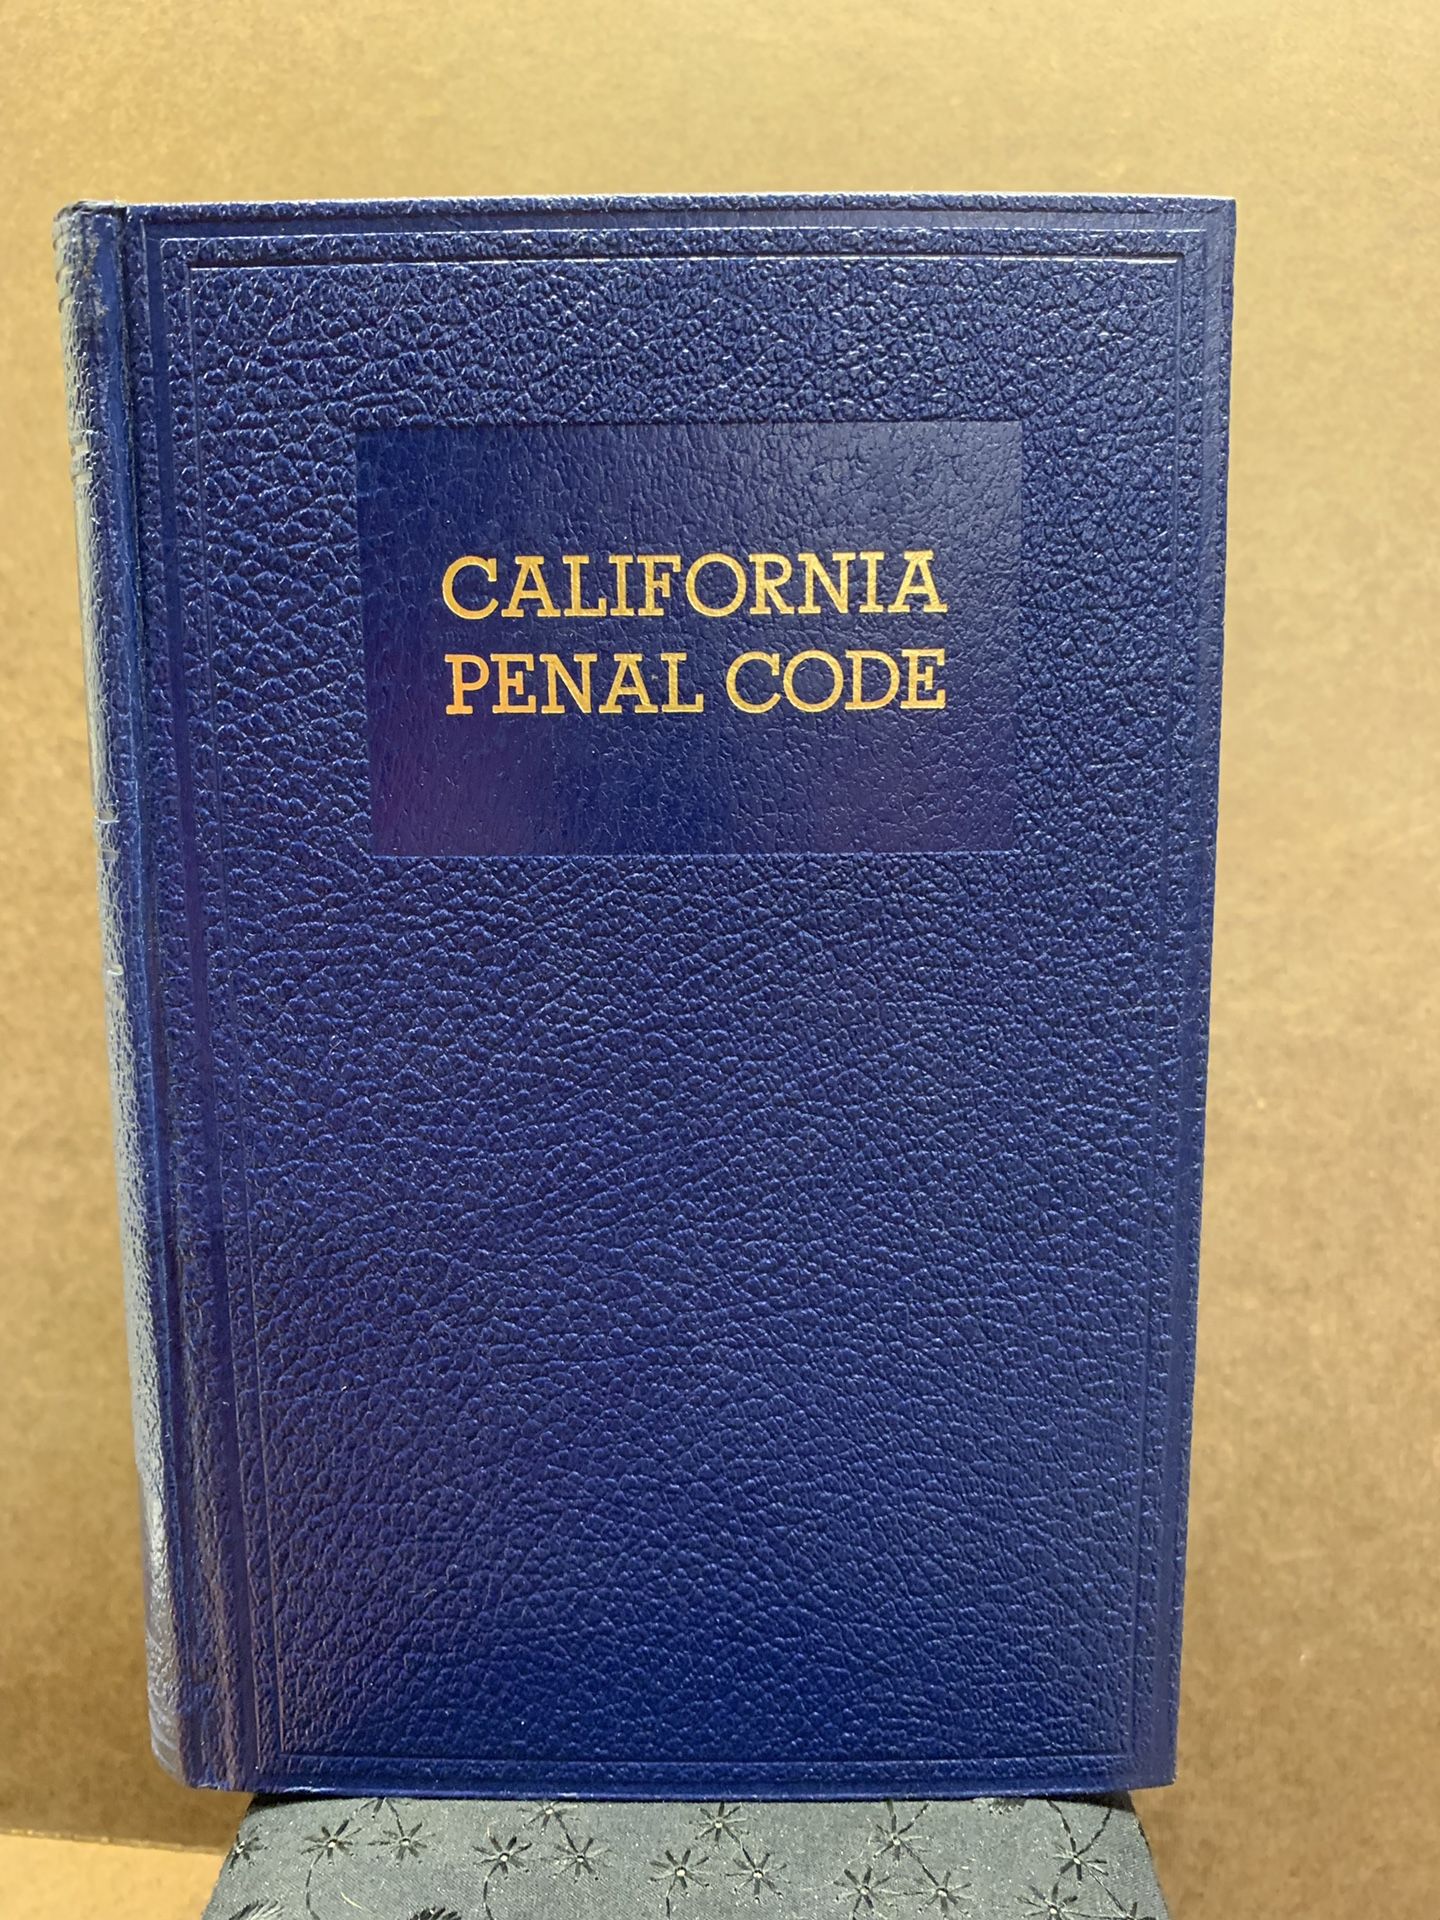 California Penal Code hard cover book 1977 - 78